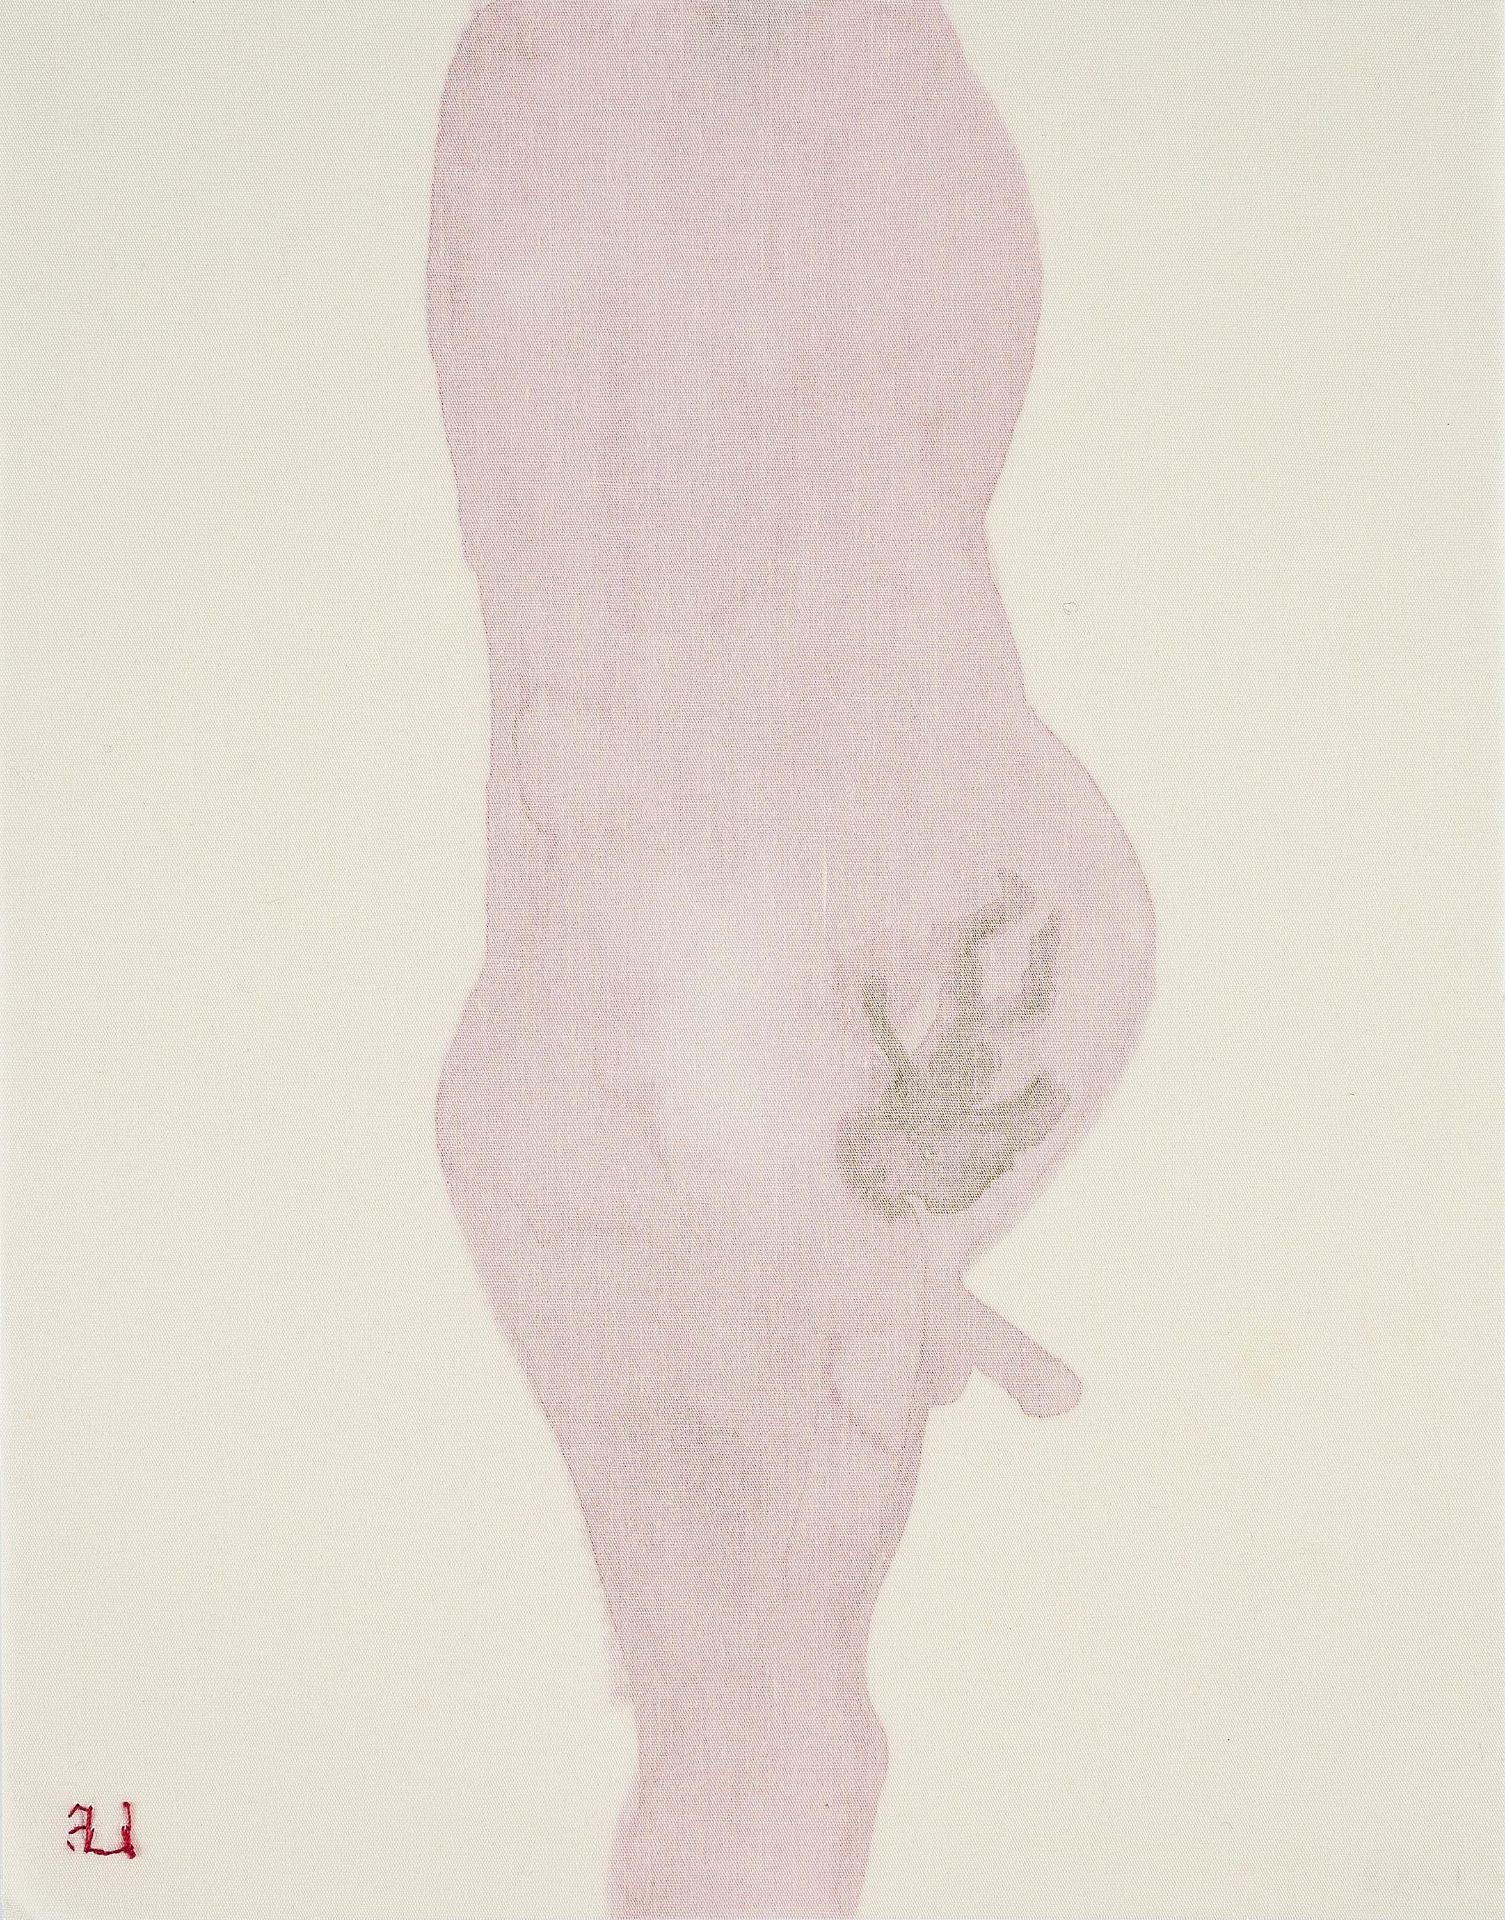 Louise Bourgeois: The Maternal Man (für Parkett 82) - Image 2 of 3